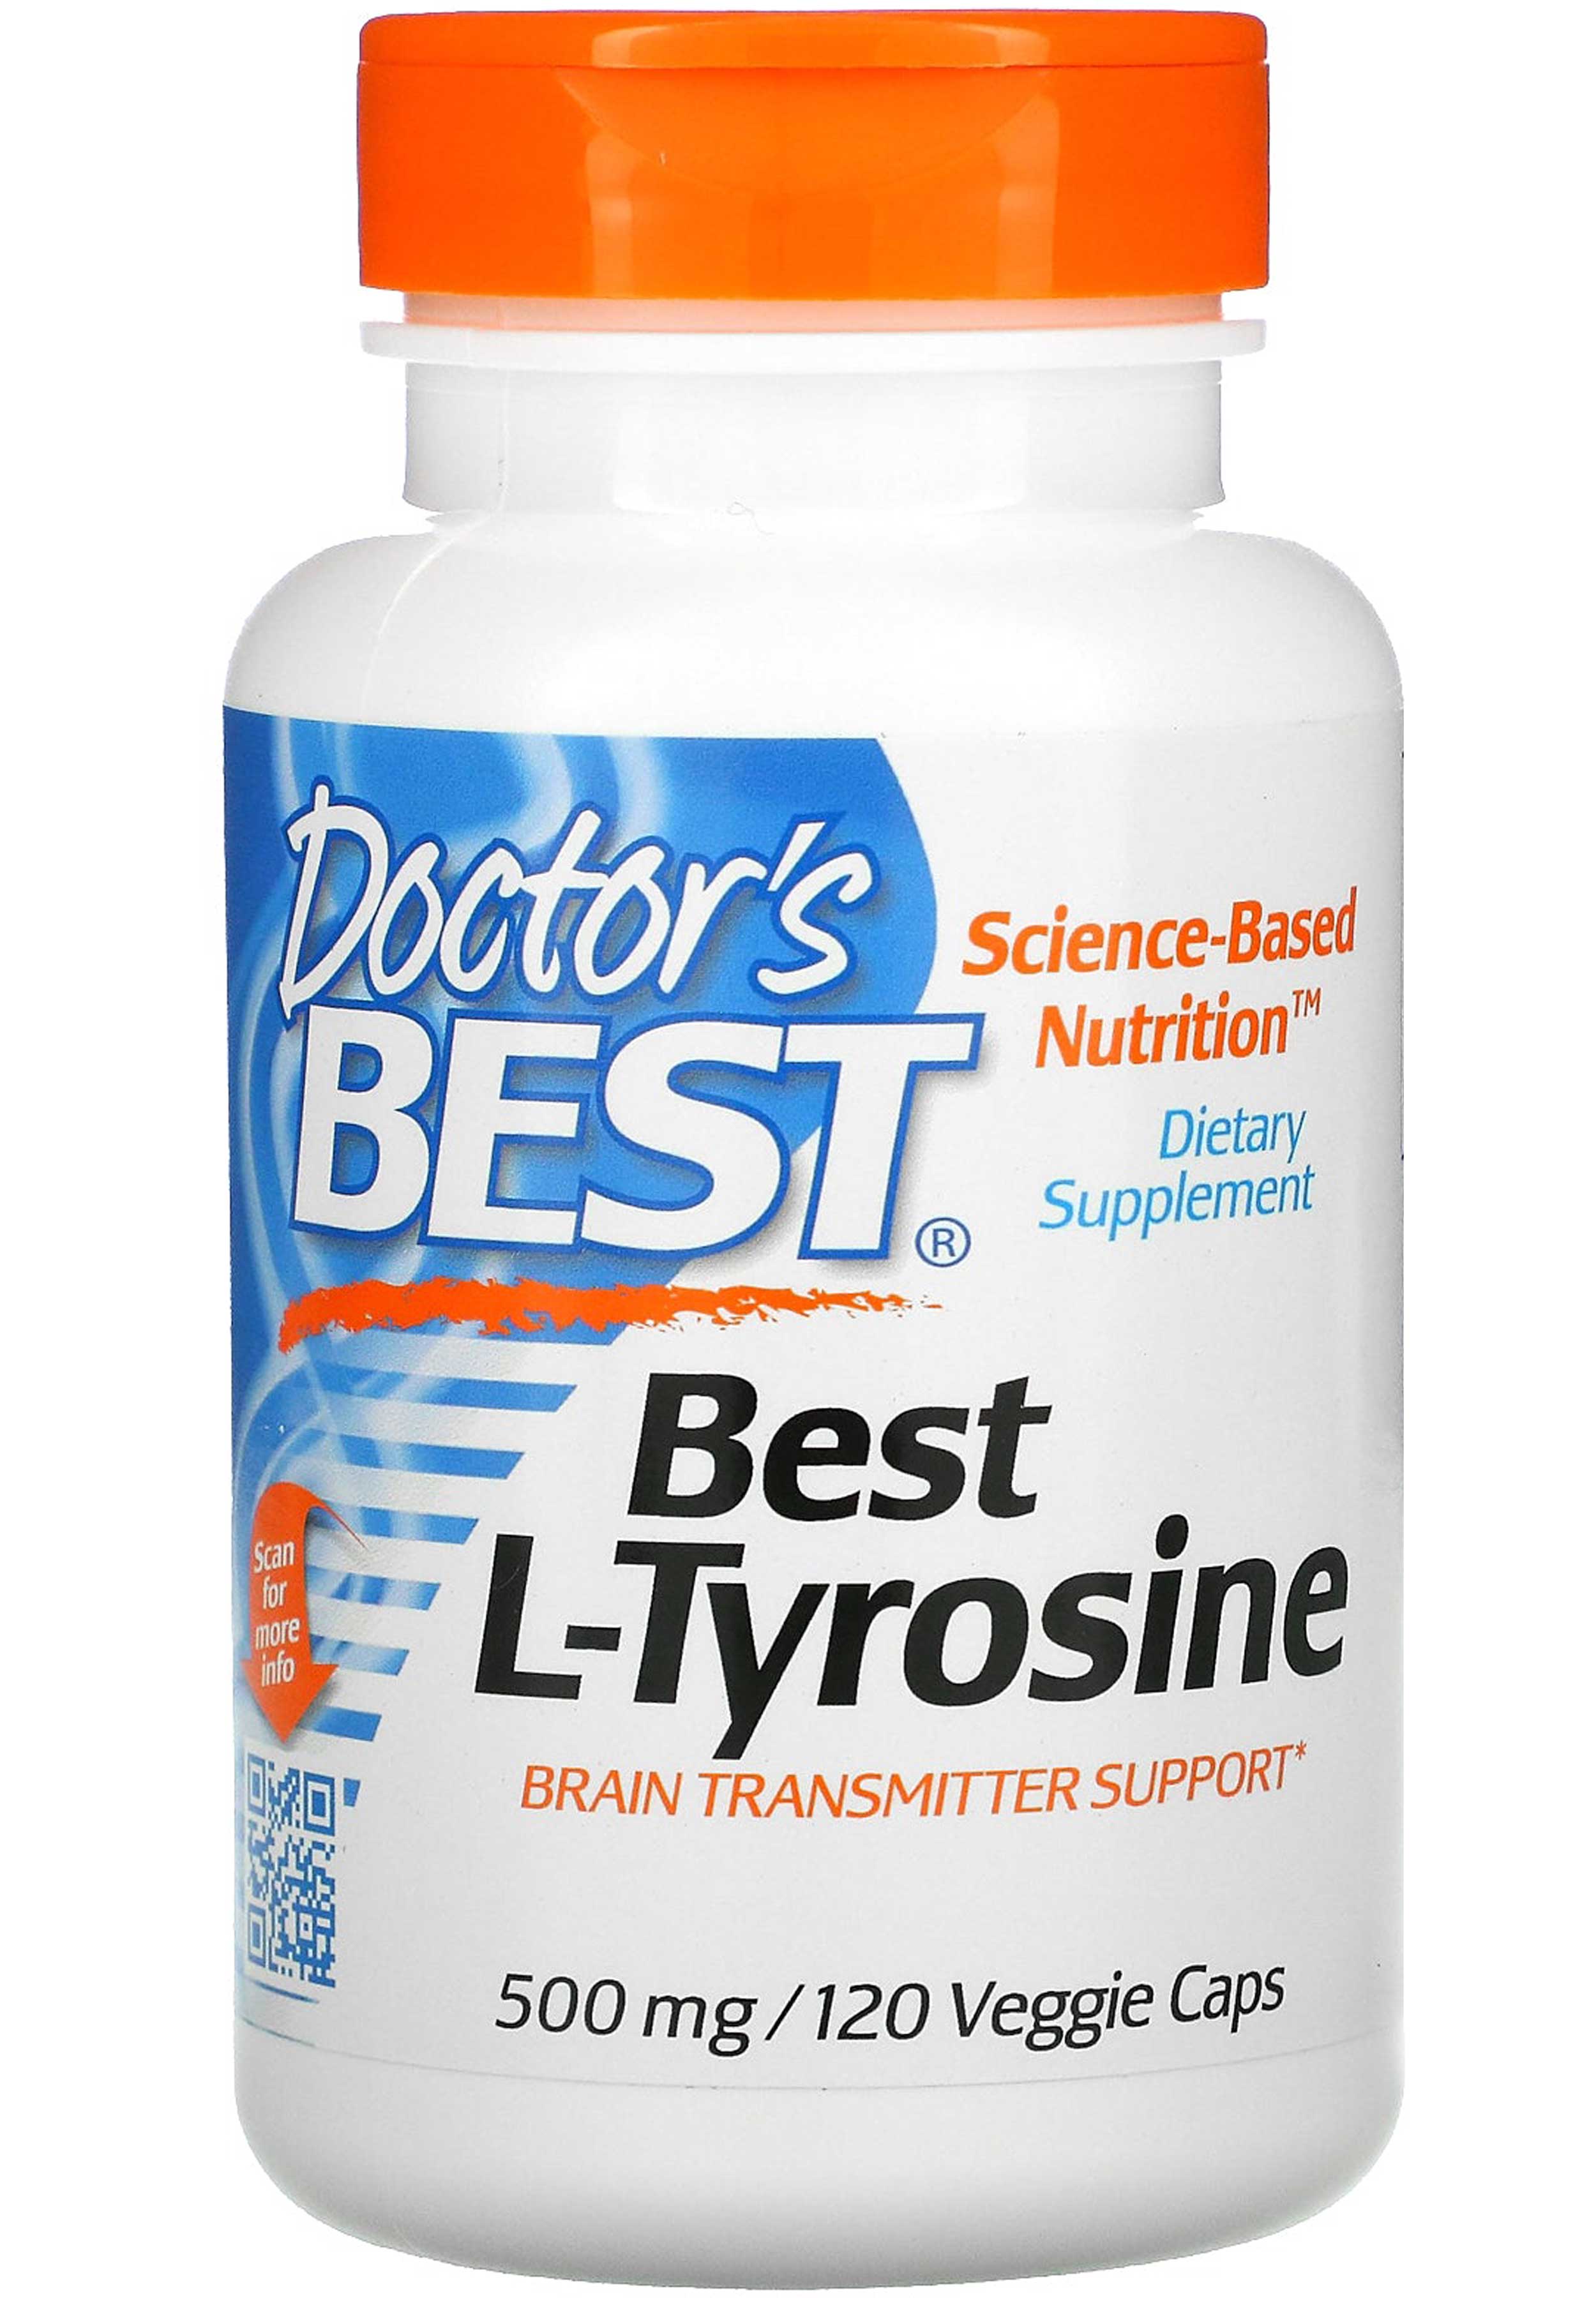 Doctor's Best Best L-Tyrosine